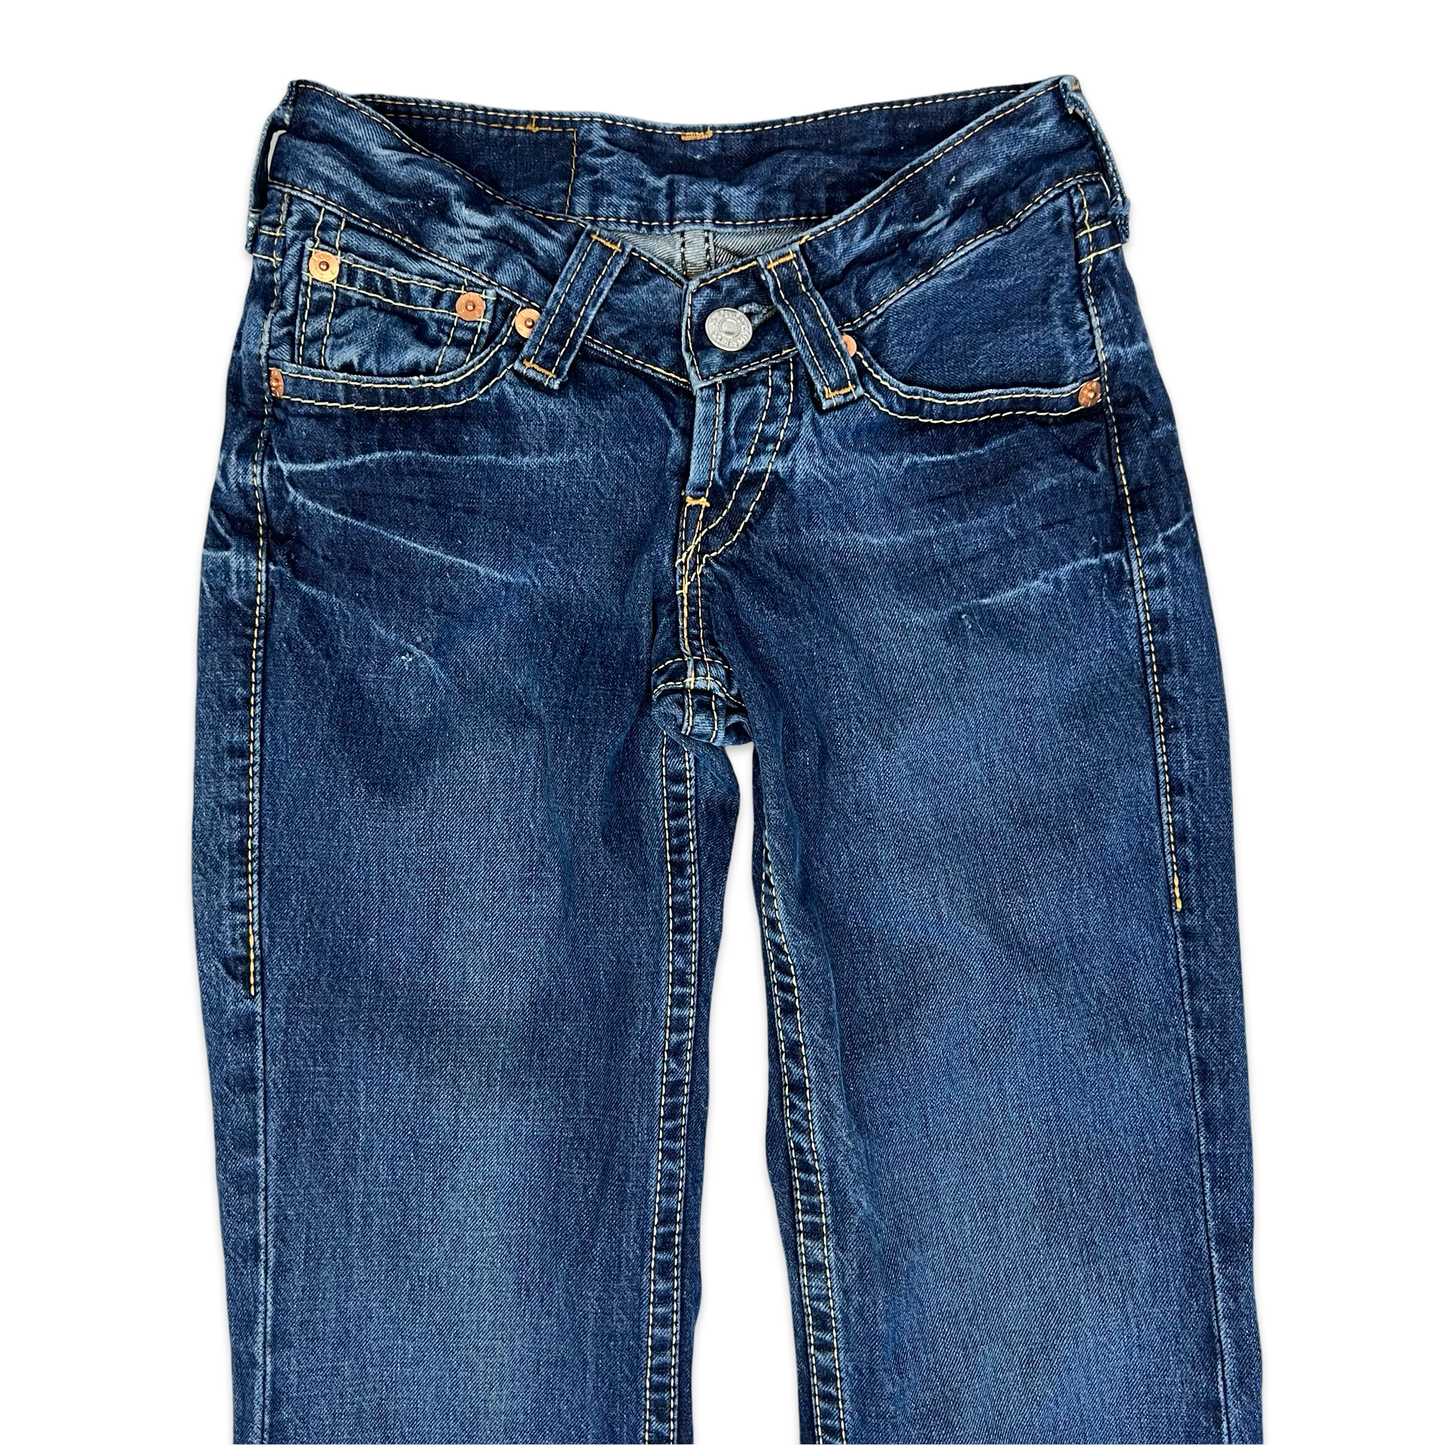 Levi's 927 Deep Blue Contrast Stitch Flared Jeans W27 L31